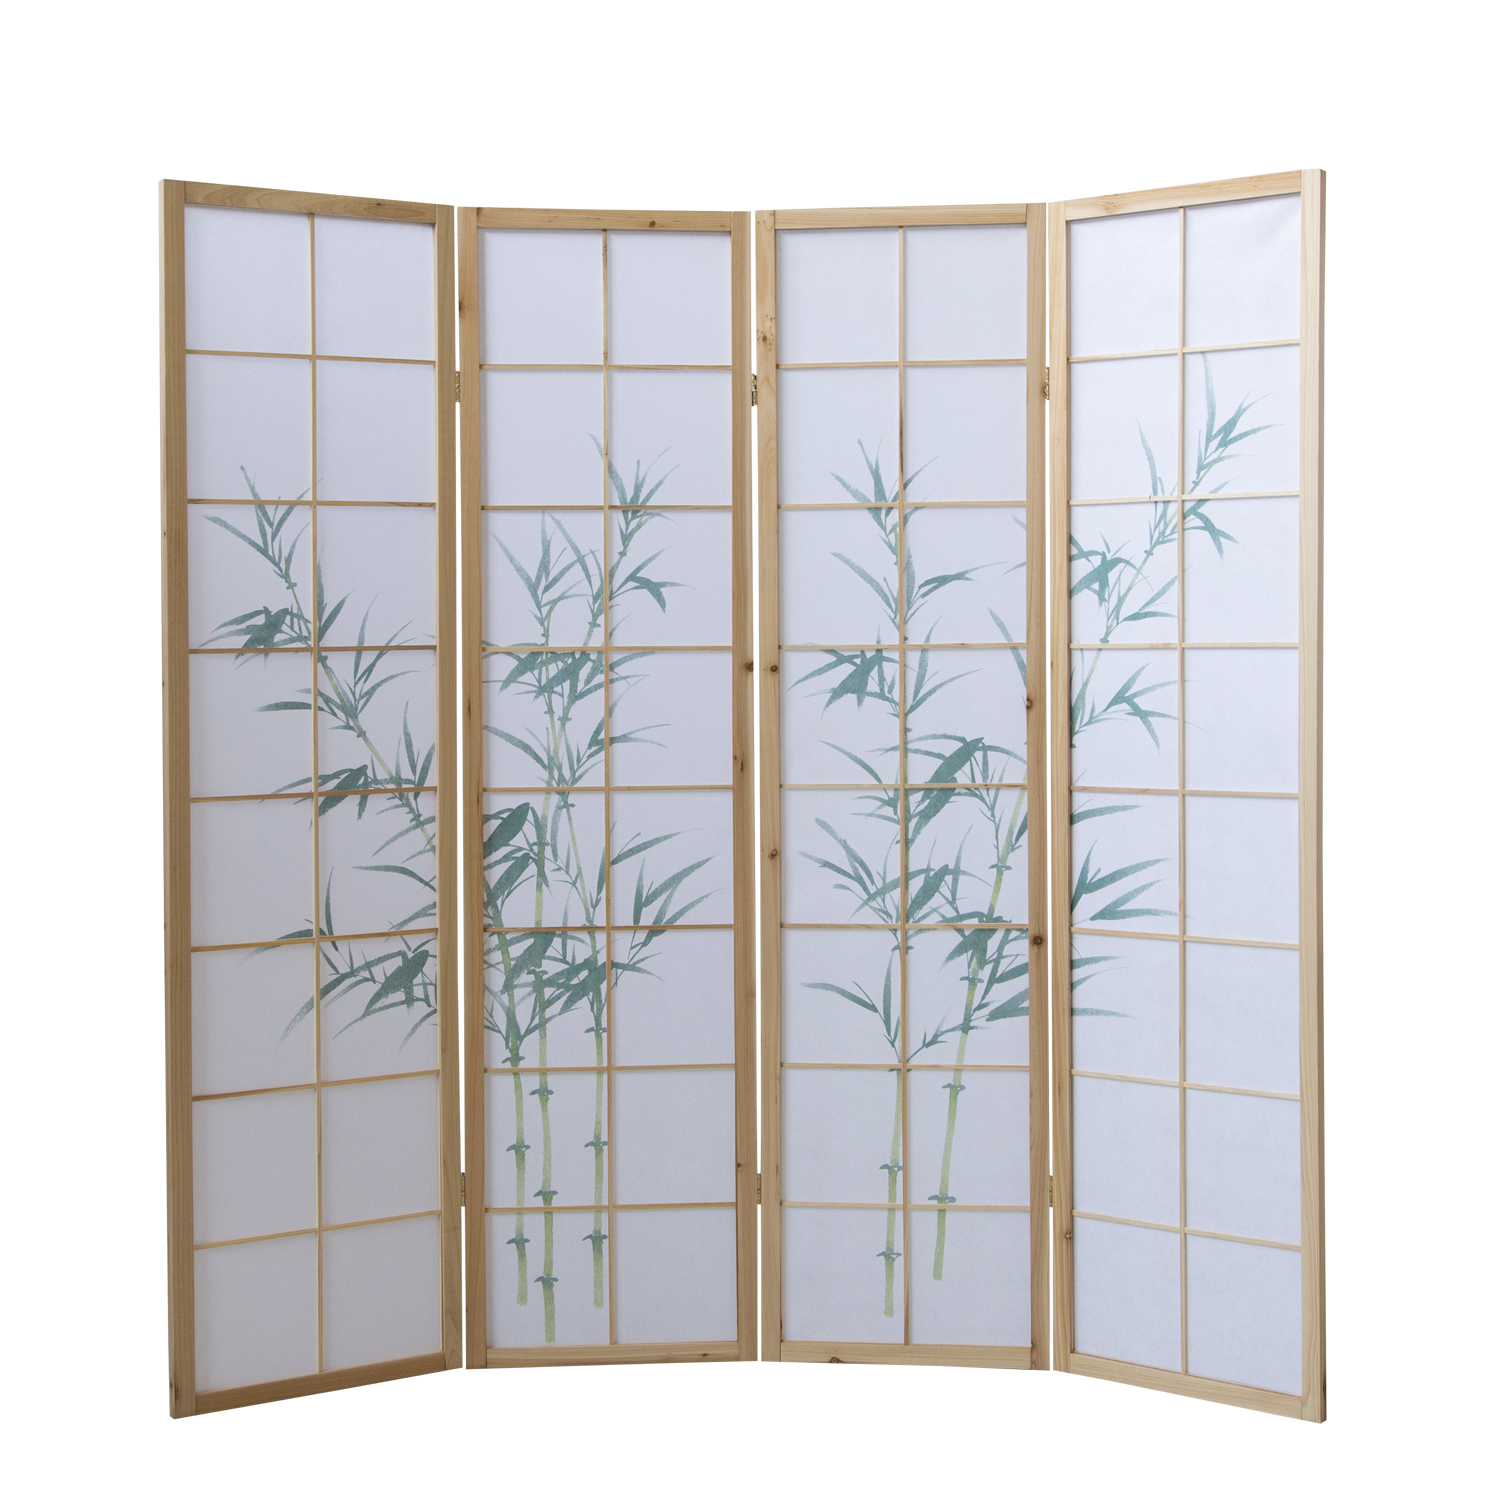 Paravent Raumteiler 4 teilig, Holz Natur, Reispapier Weiß, Bambusmuster, Höhe 175 cm	